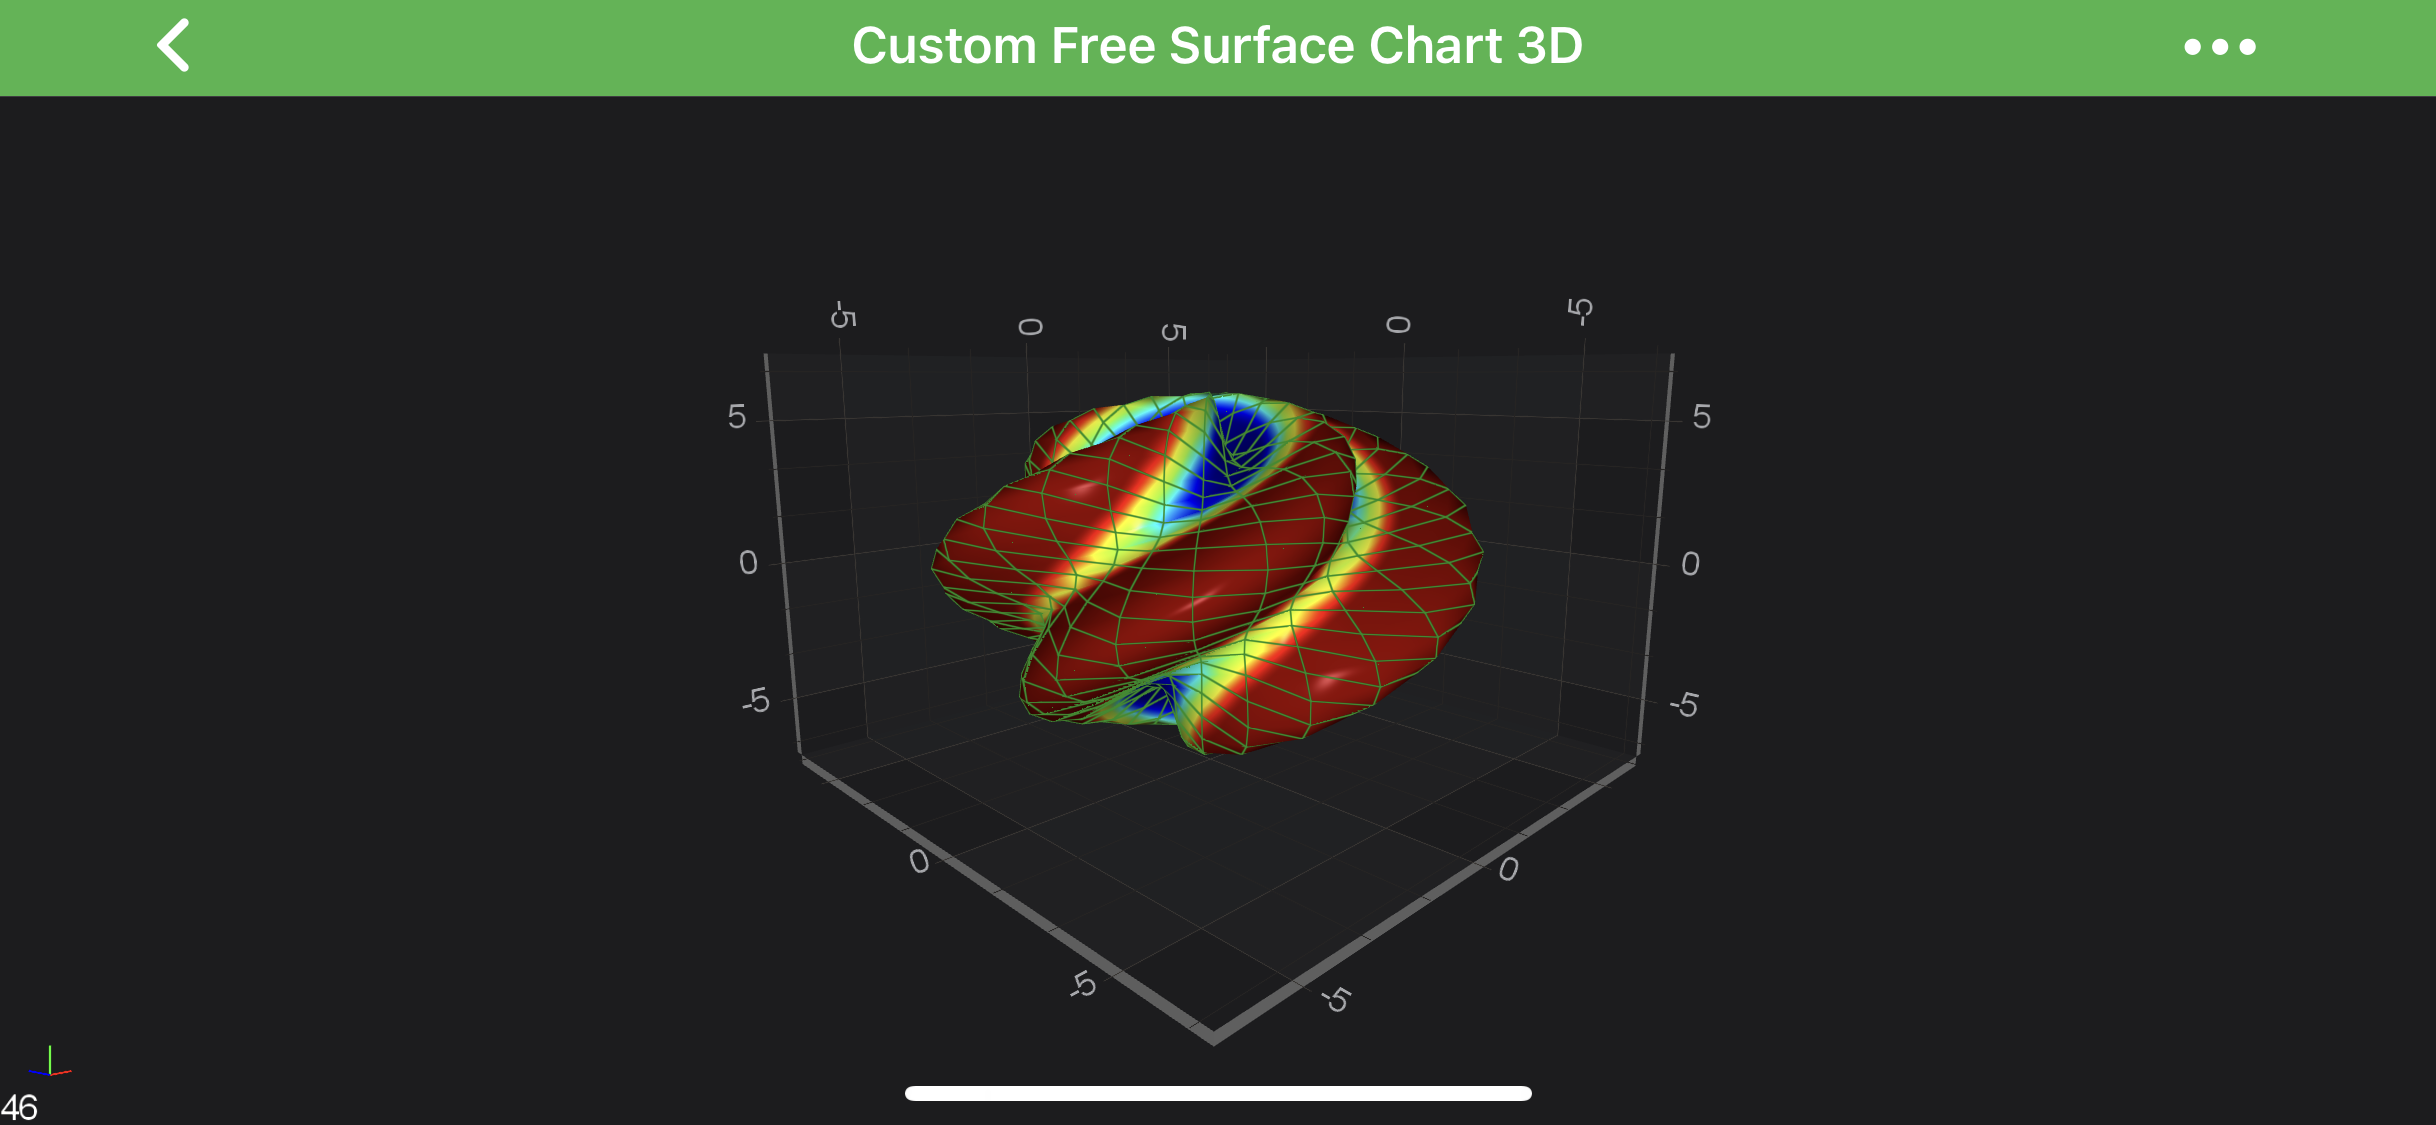 Custom Free Surface Chart 3D